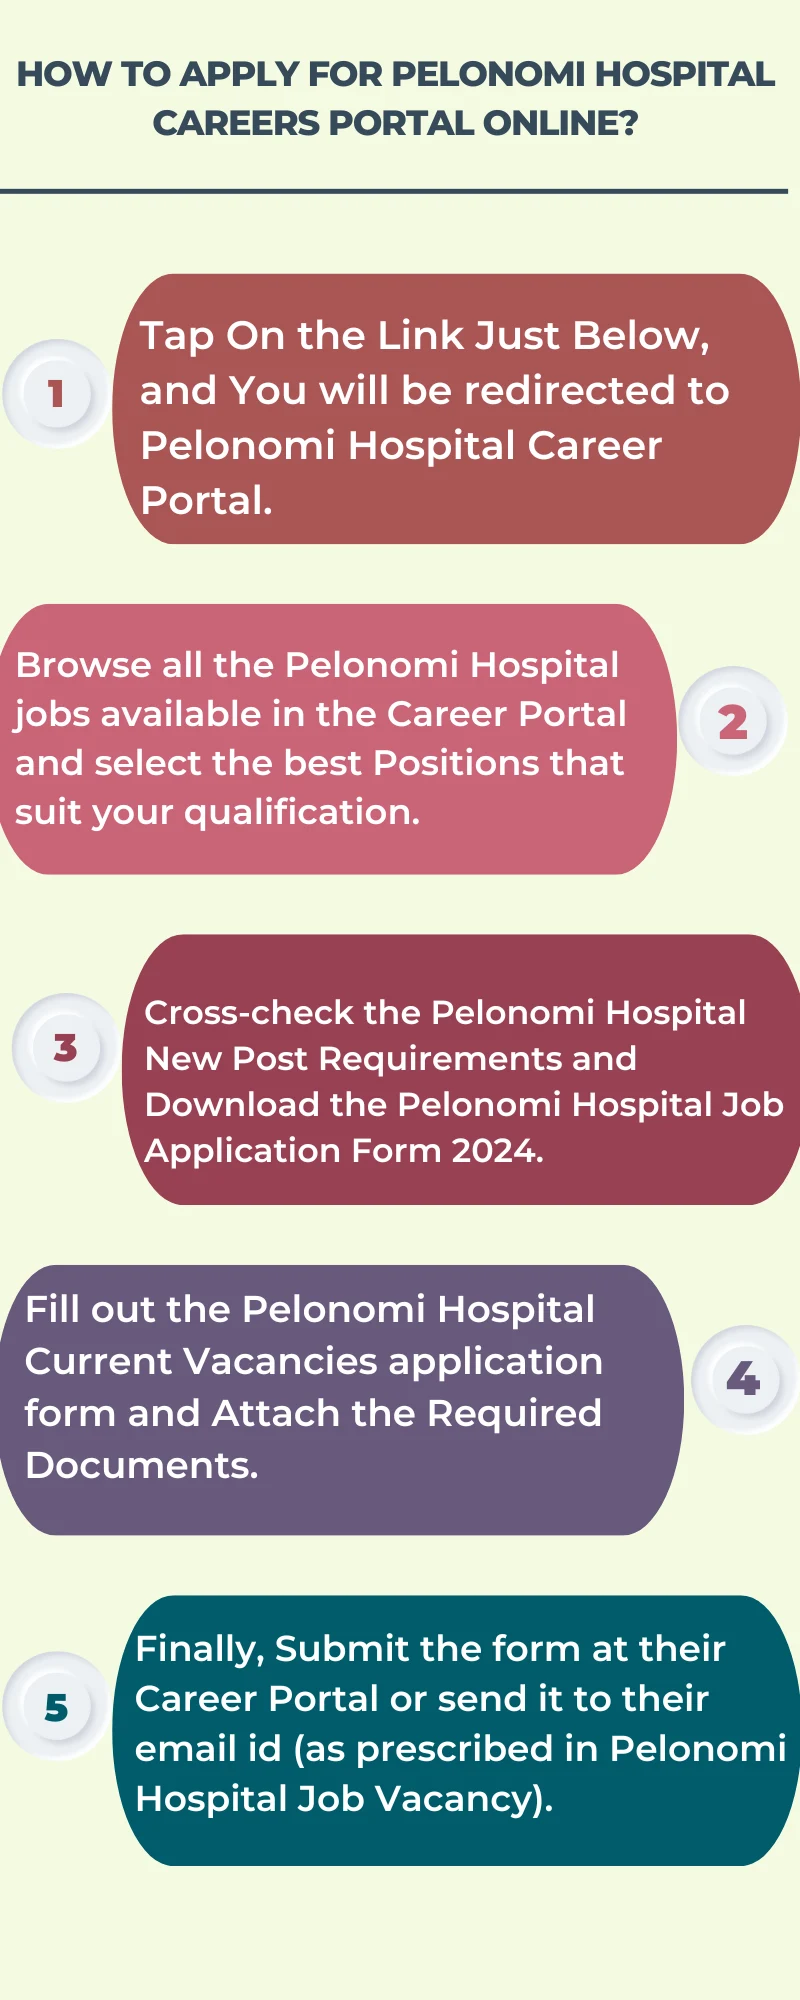 How To Apply for Pelonomi Hospital Careers Portal Online?